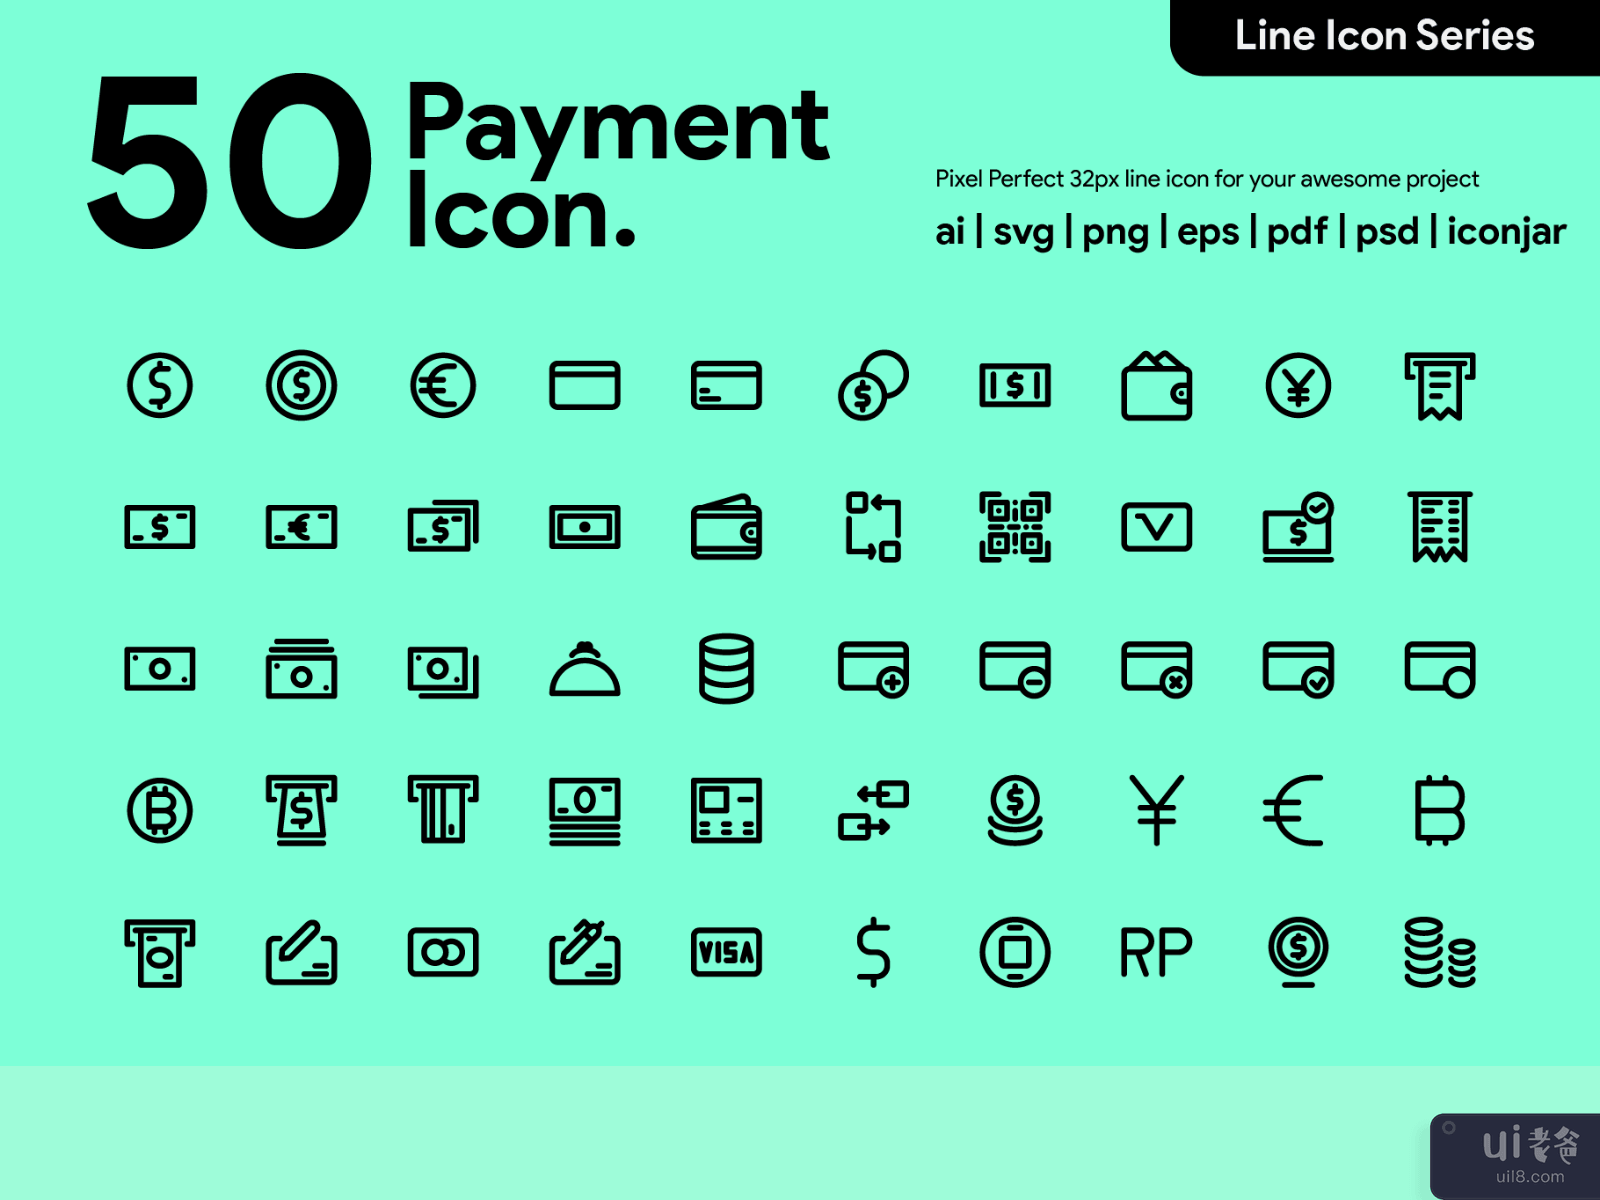 Kawaicon - 50 Payment Line Icon